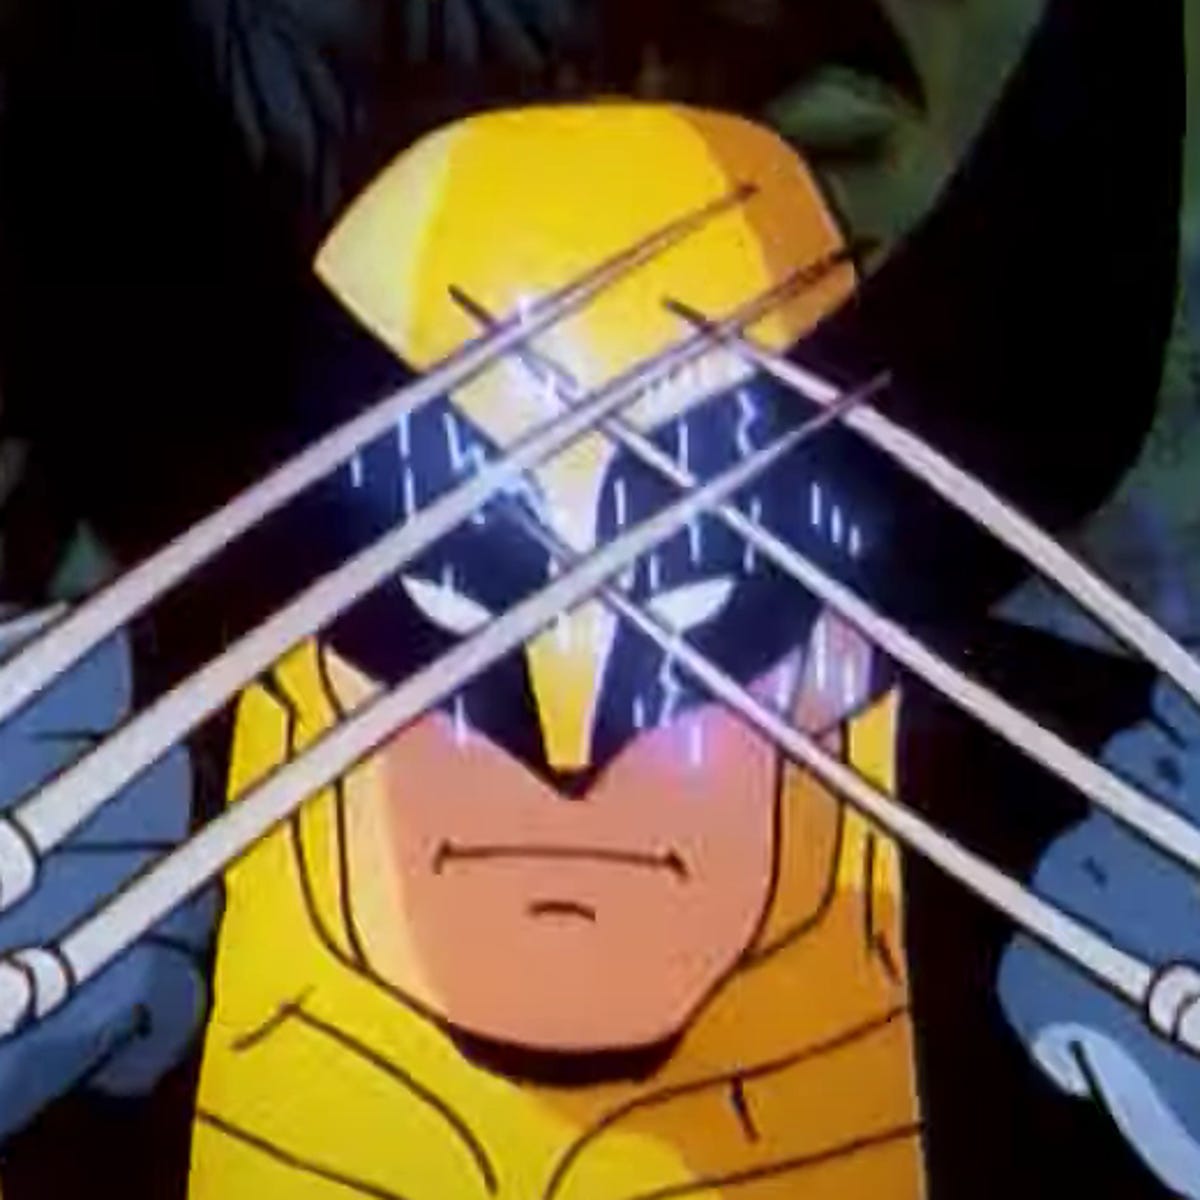 X-Men animated series' Wolverine returns for Disney Plus revival - CNET